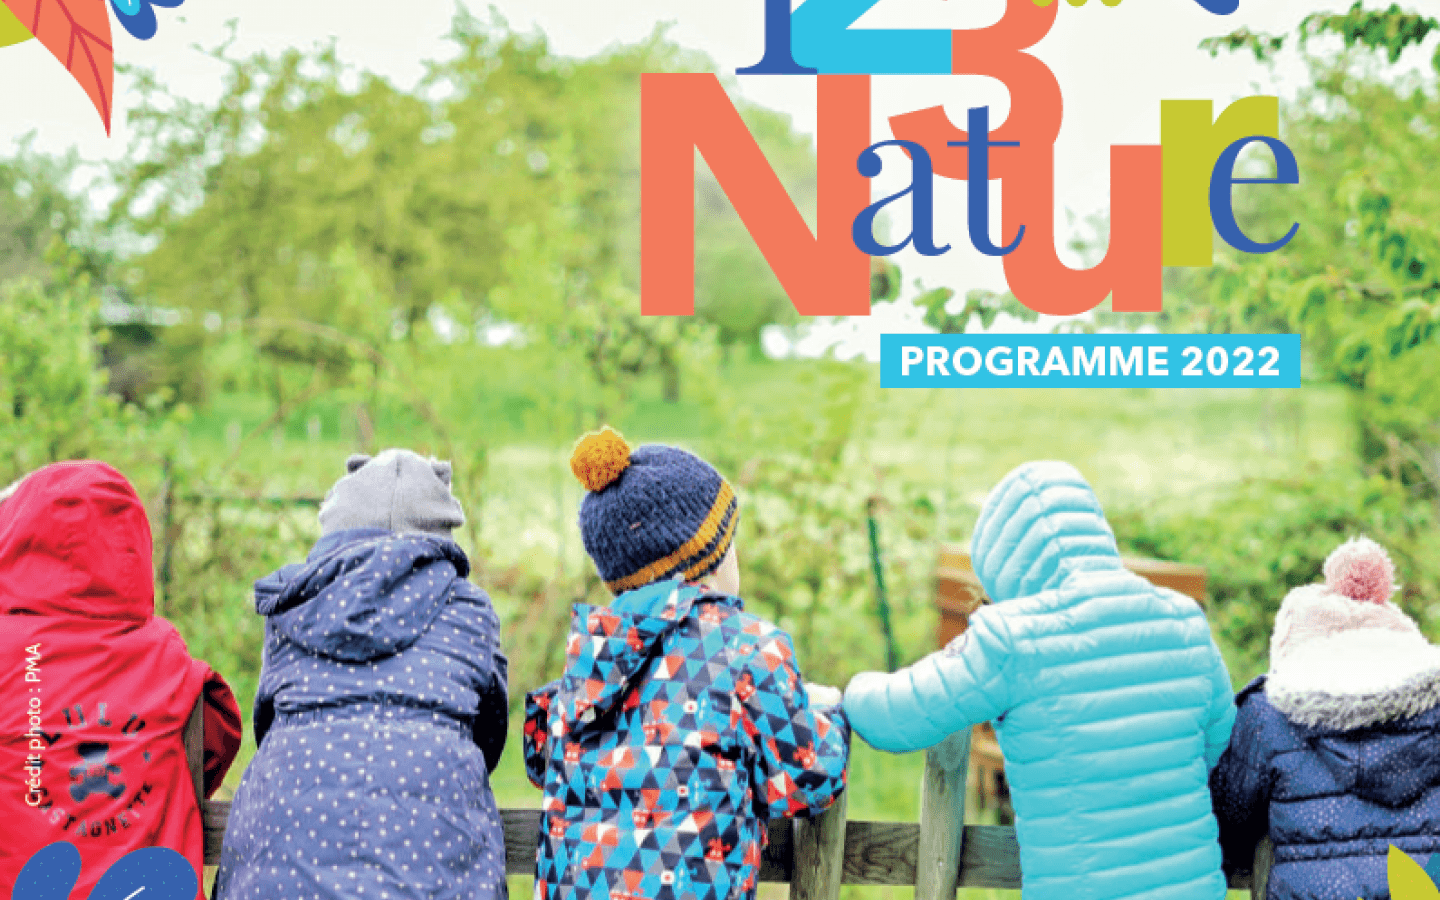 '1, 2, 3... Nature' - Programme 2022